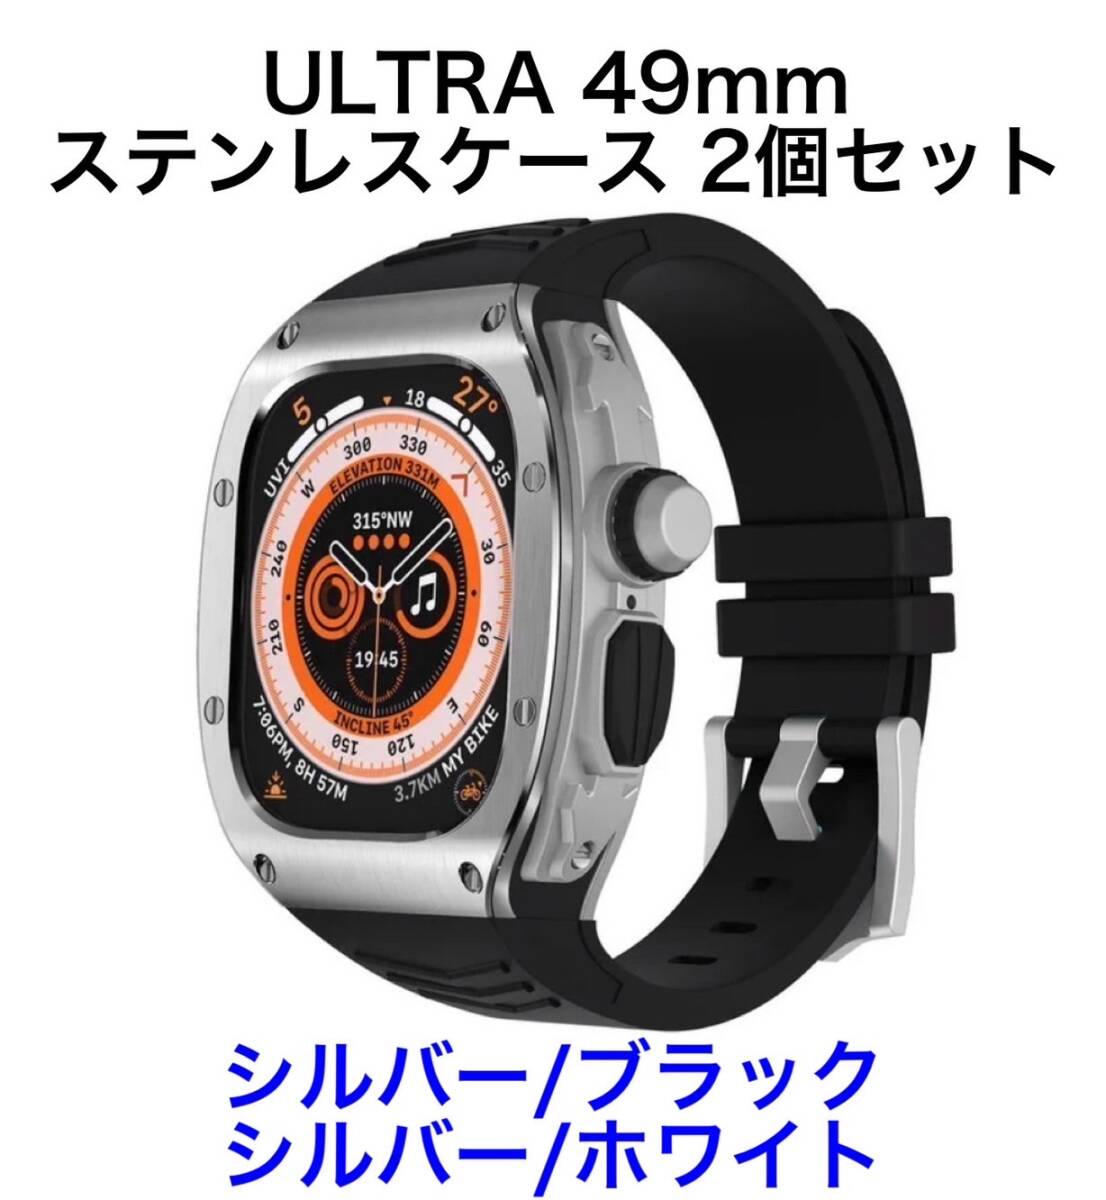 Apple watch ultra2 49mm ステンレス製高級ケース ラバーベルト シルバー/ブラック シルバー/ホワイト 2個セット